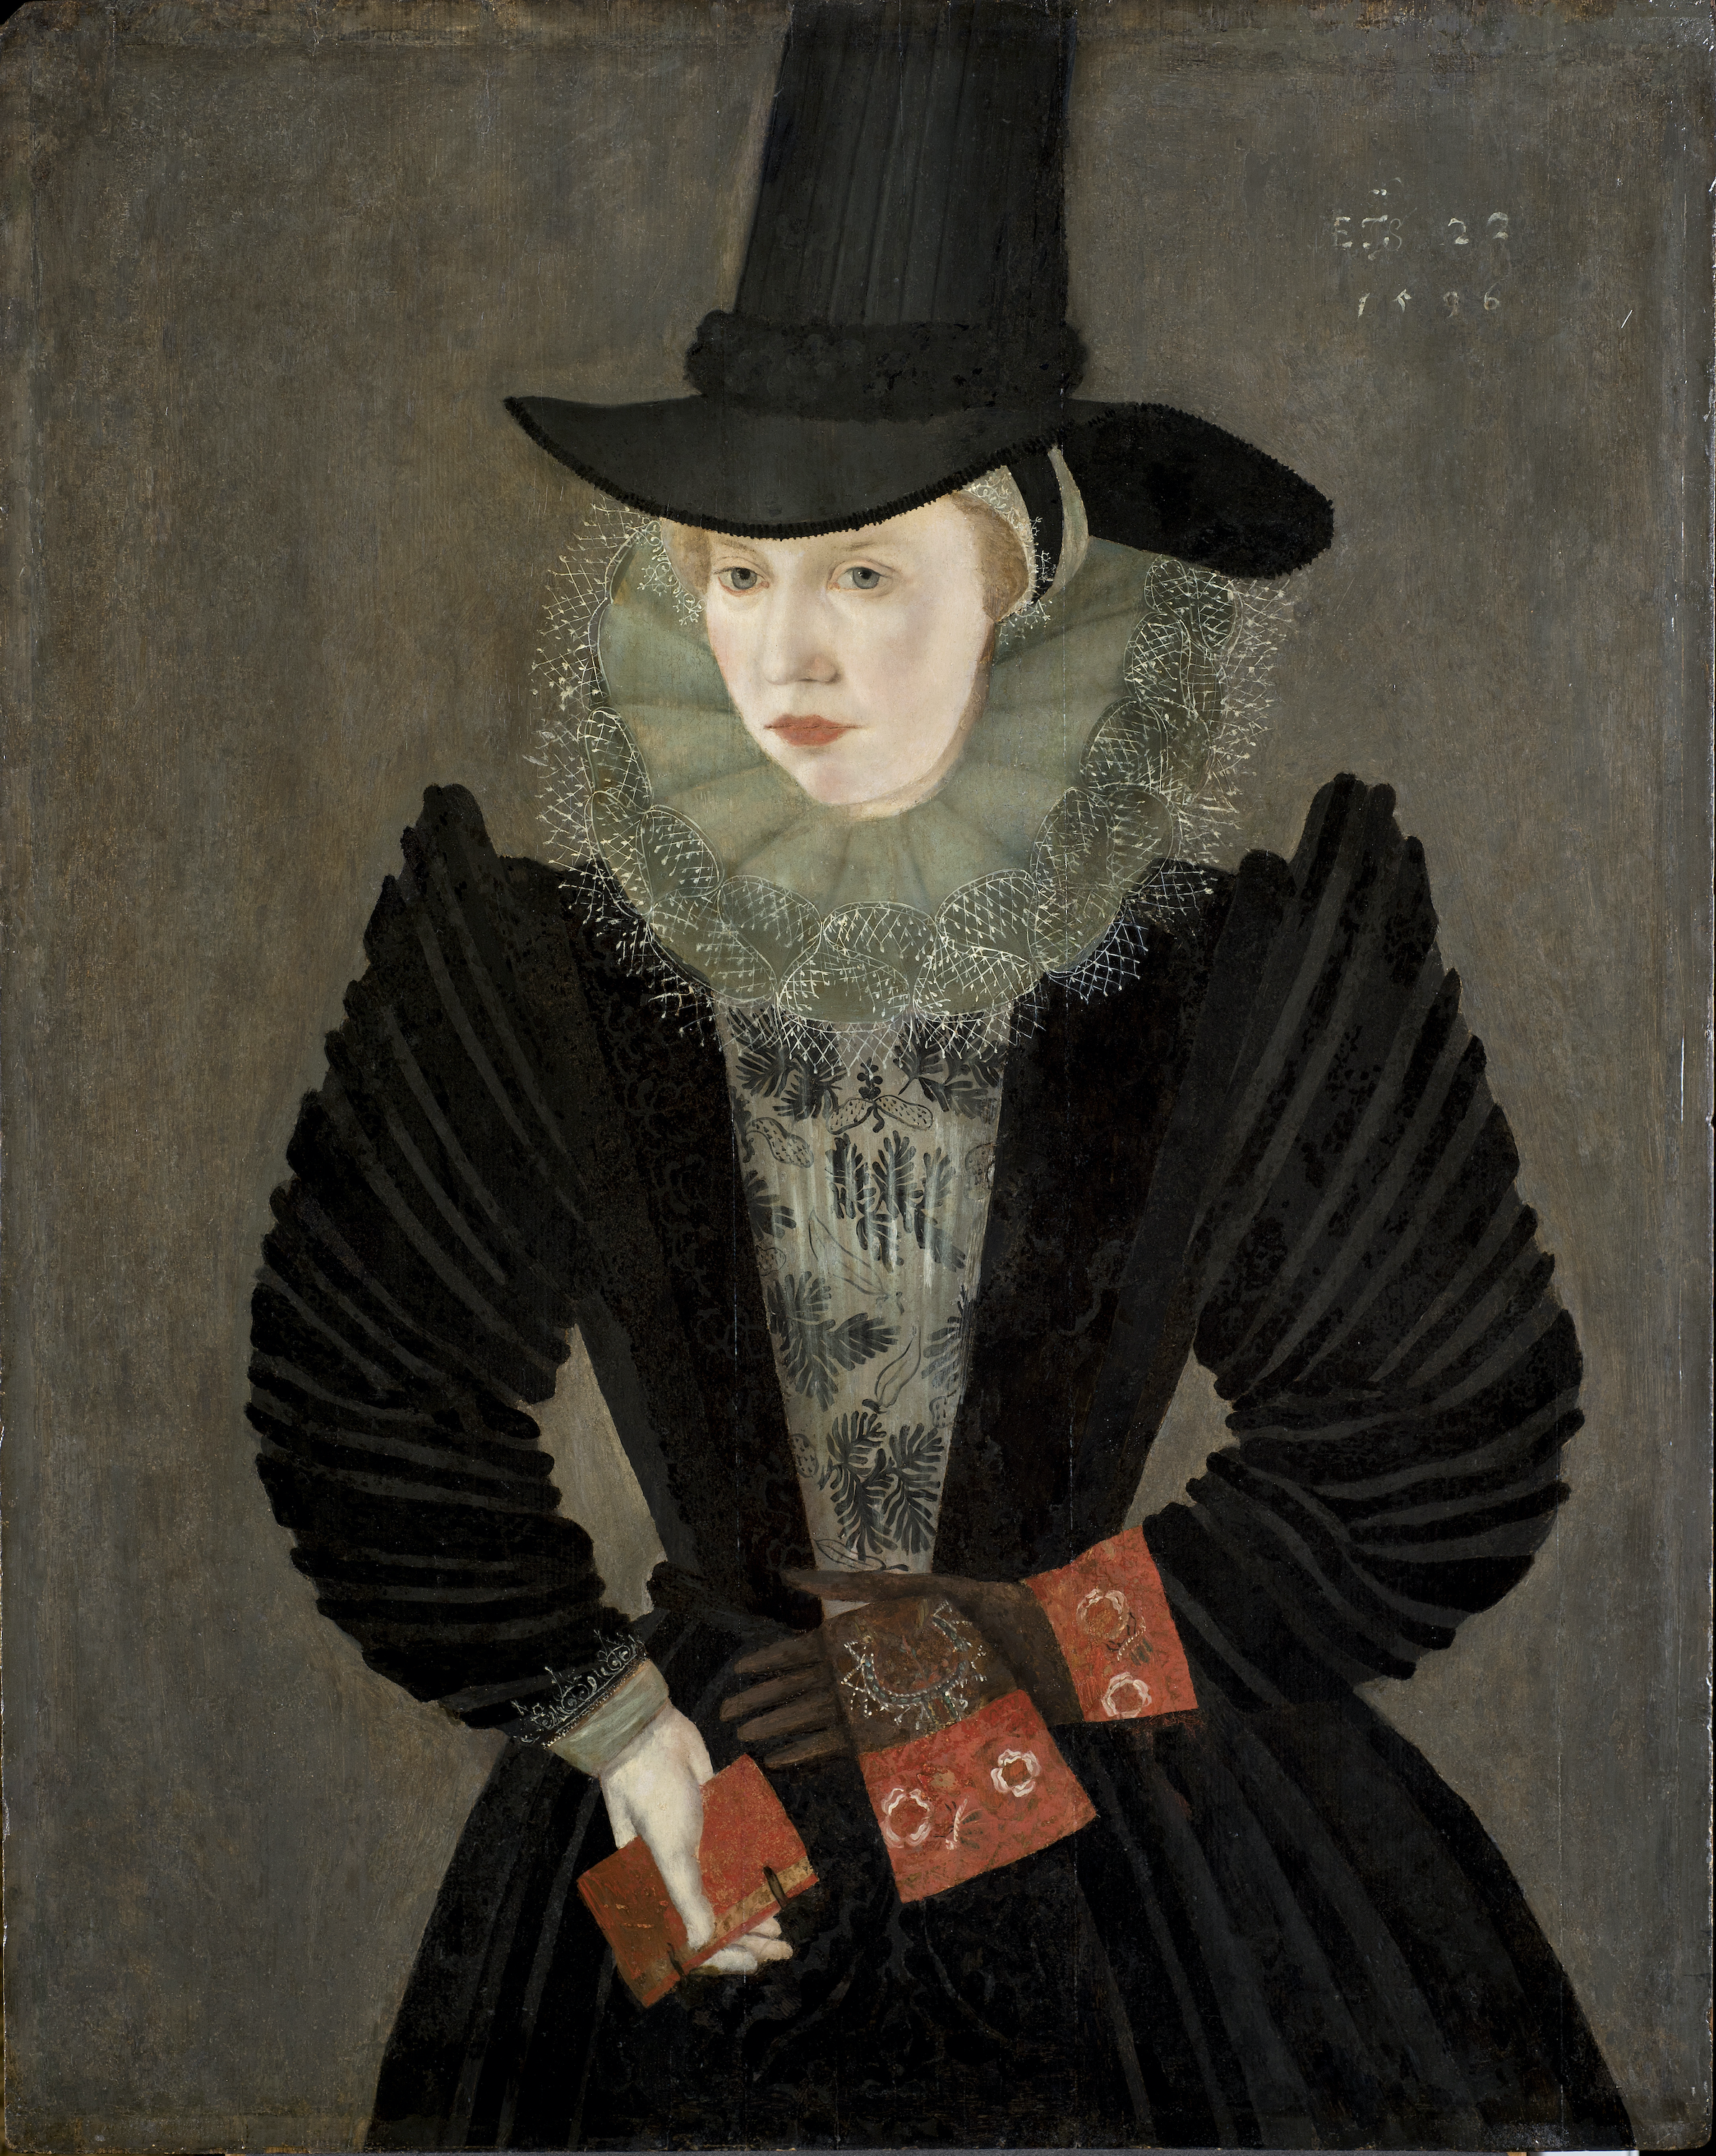 Joan Alleyn by Bilinmeyen Sanatçı - 1596 - 79.1 x 63.2 cm 